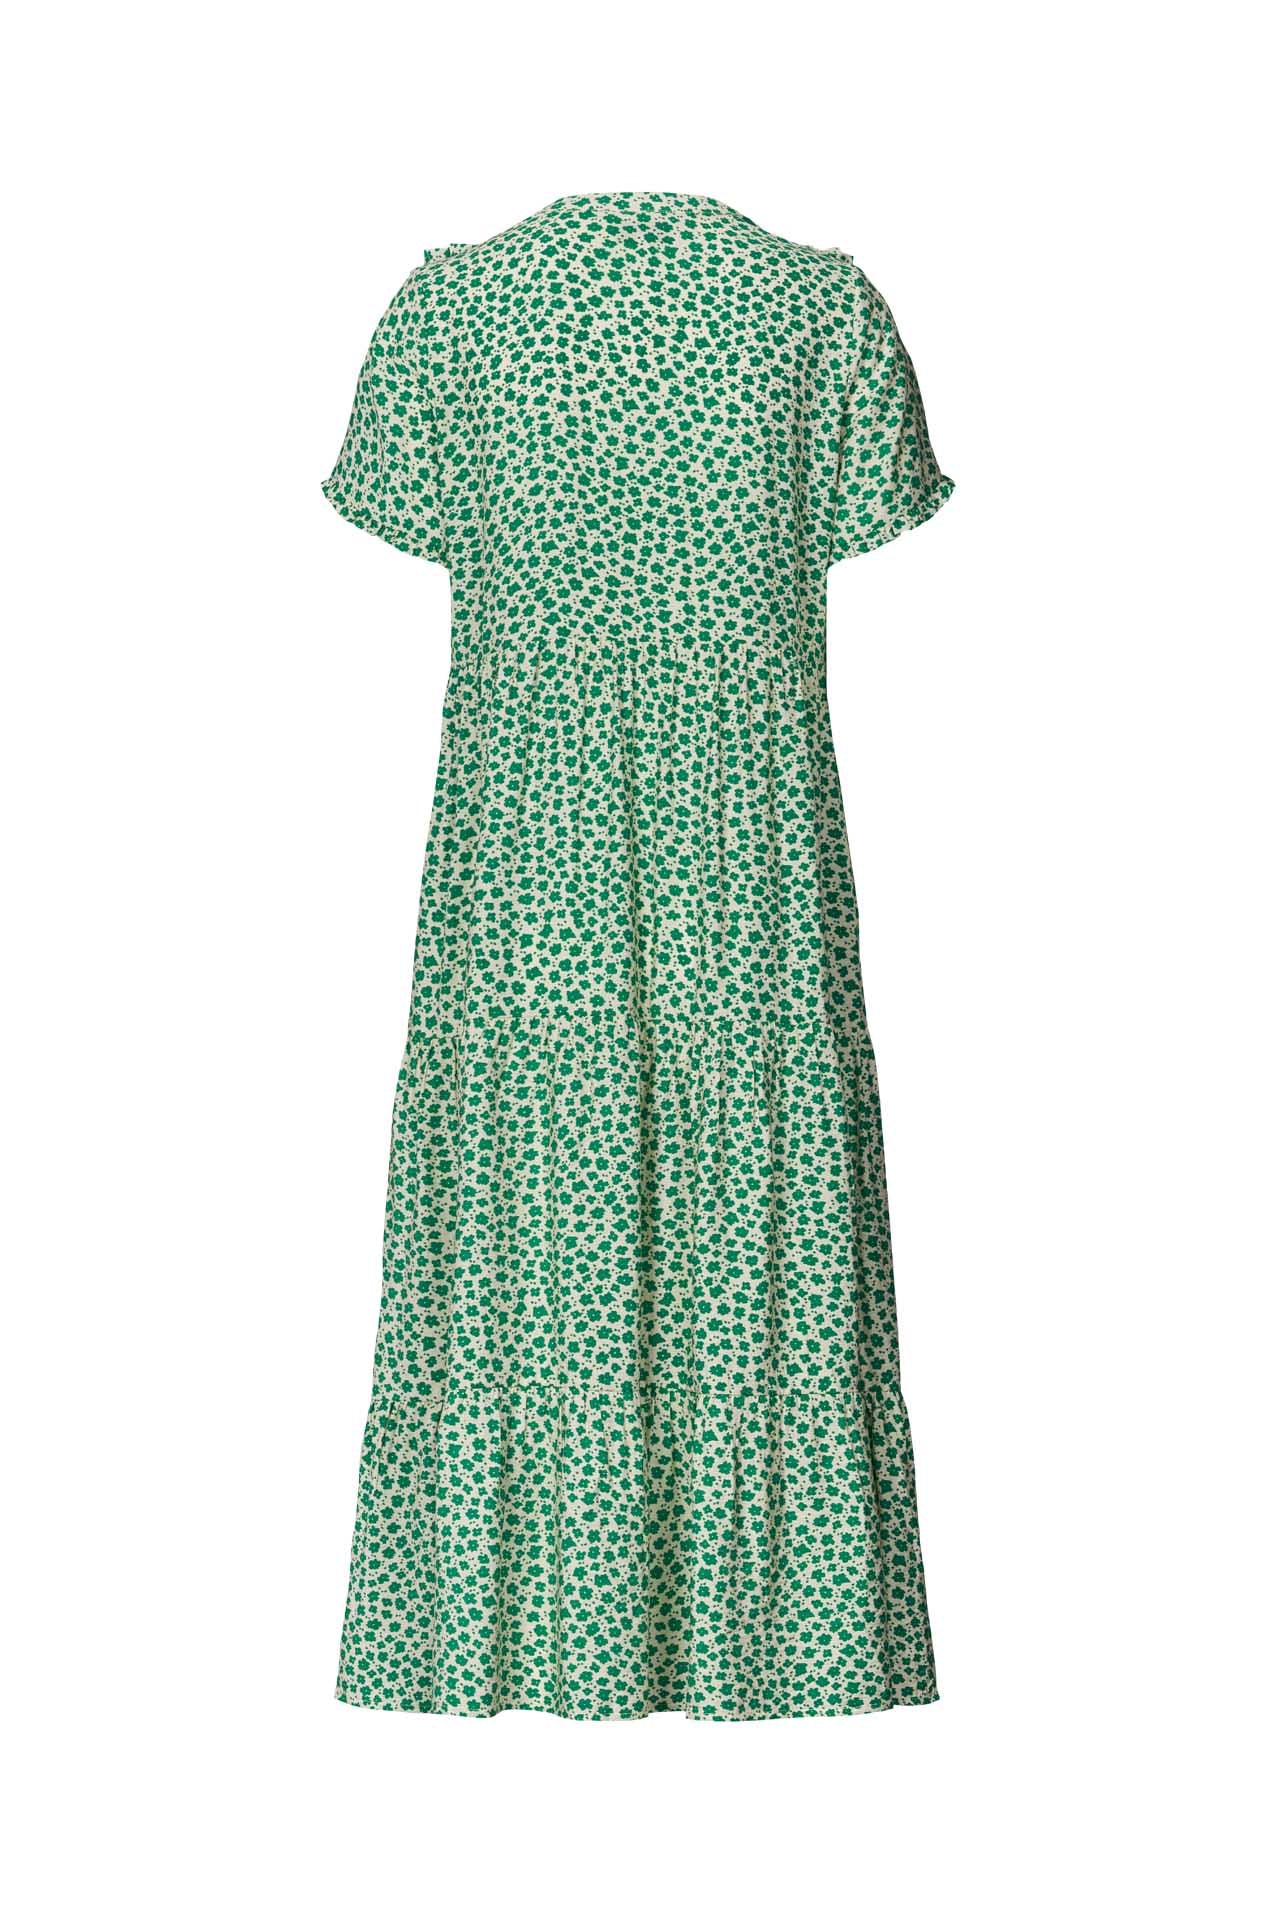 Lollys Laundry Freddy Dress - Green Floral